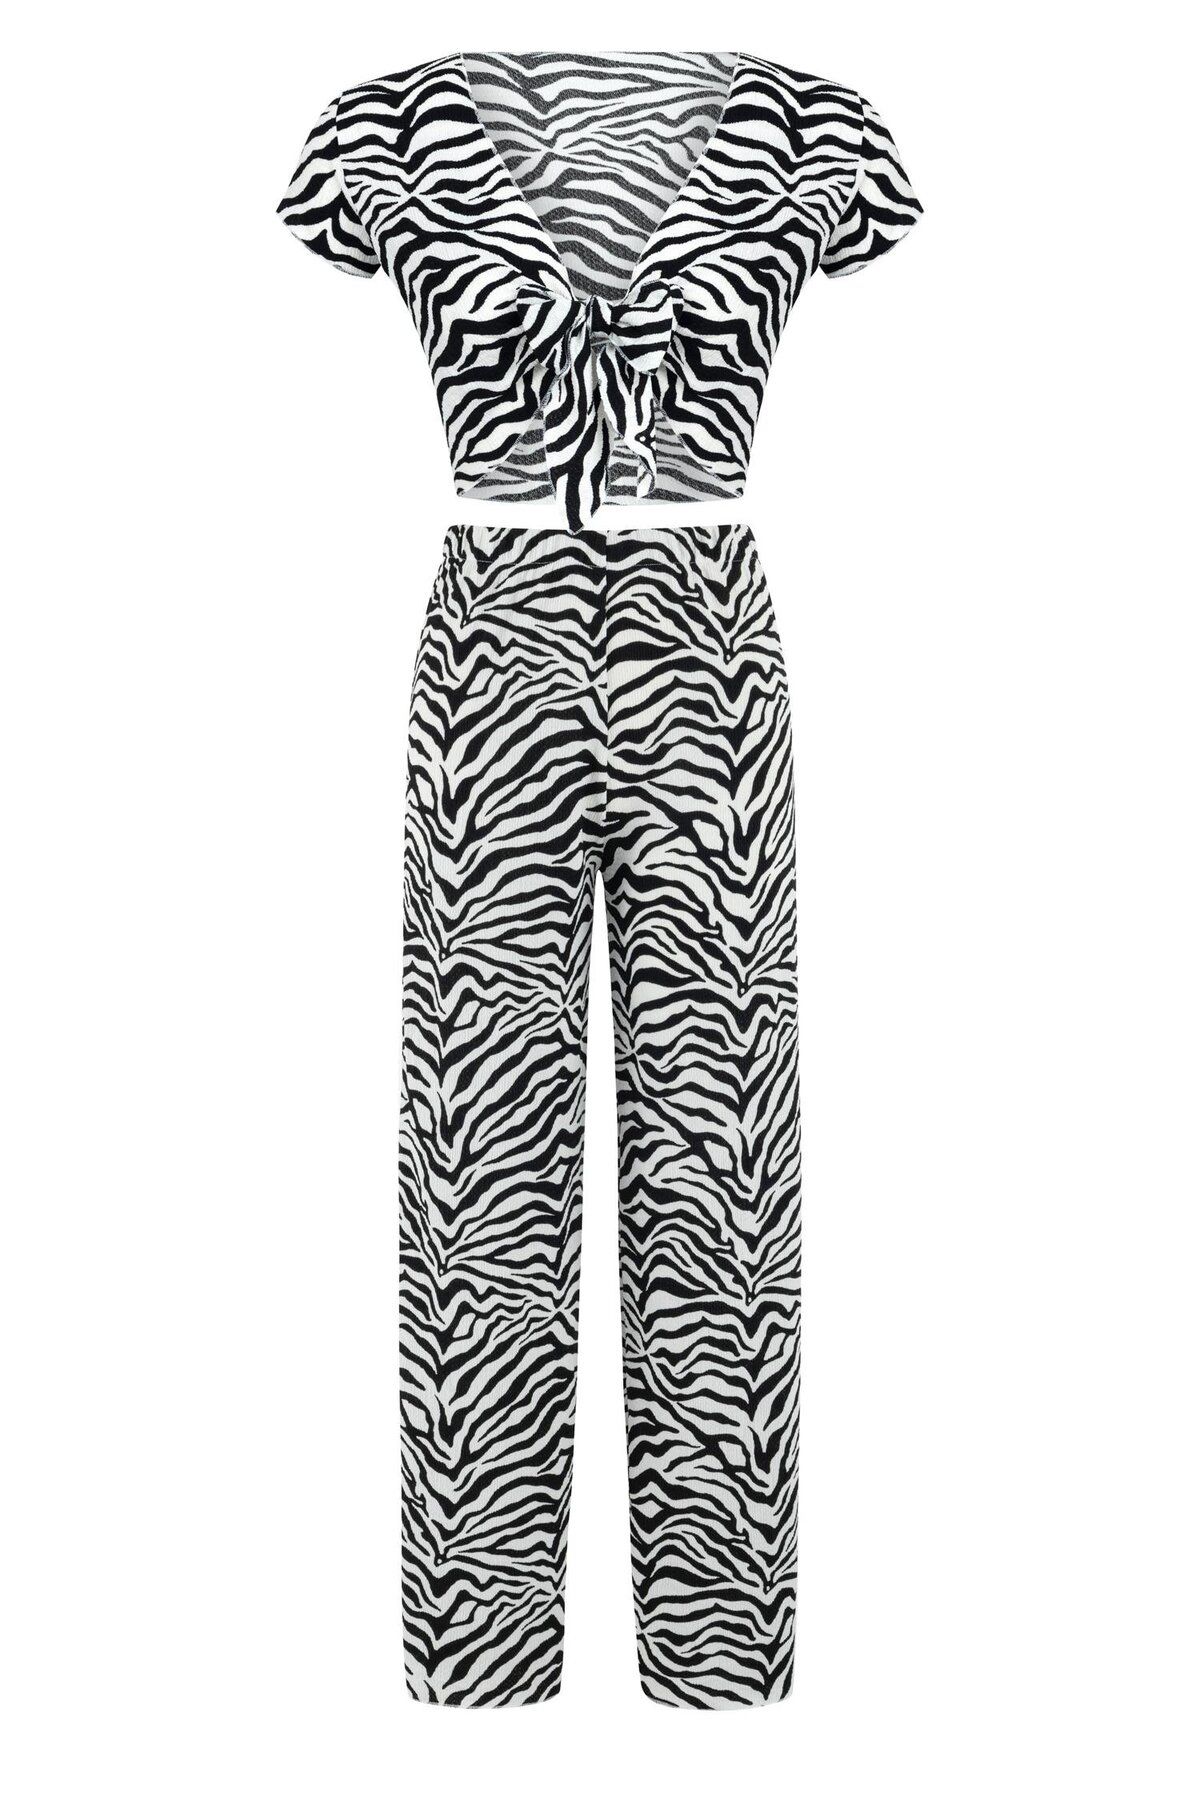 Aquella Dikiş Detaylı Zebra Desen Crop Pantolon Takım